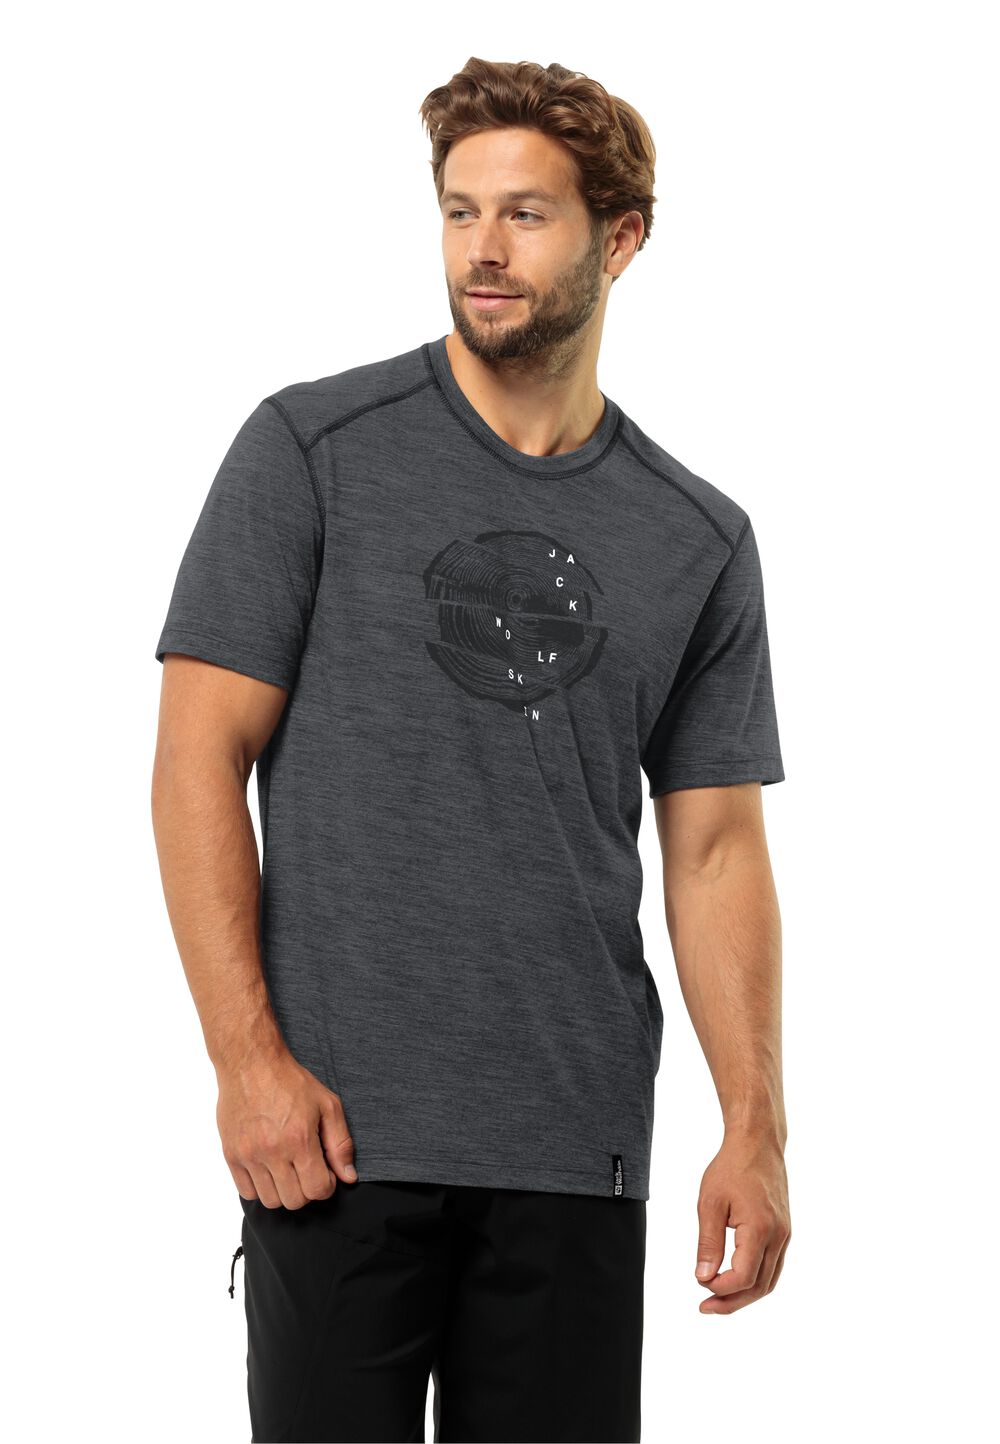 Jack Wolfskin Kammweg Graphic S S Men Heren T-shirt van merinoswol 3XL phantom